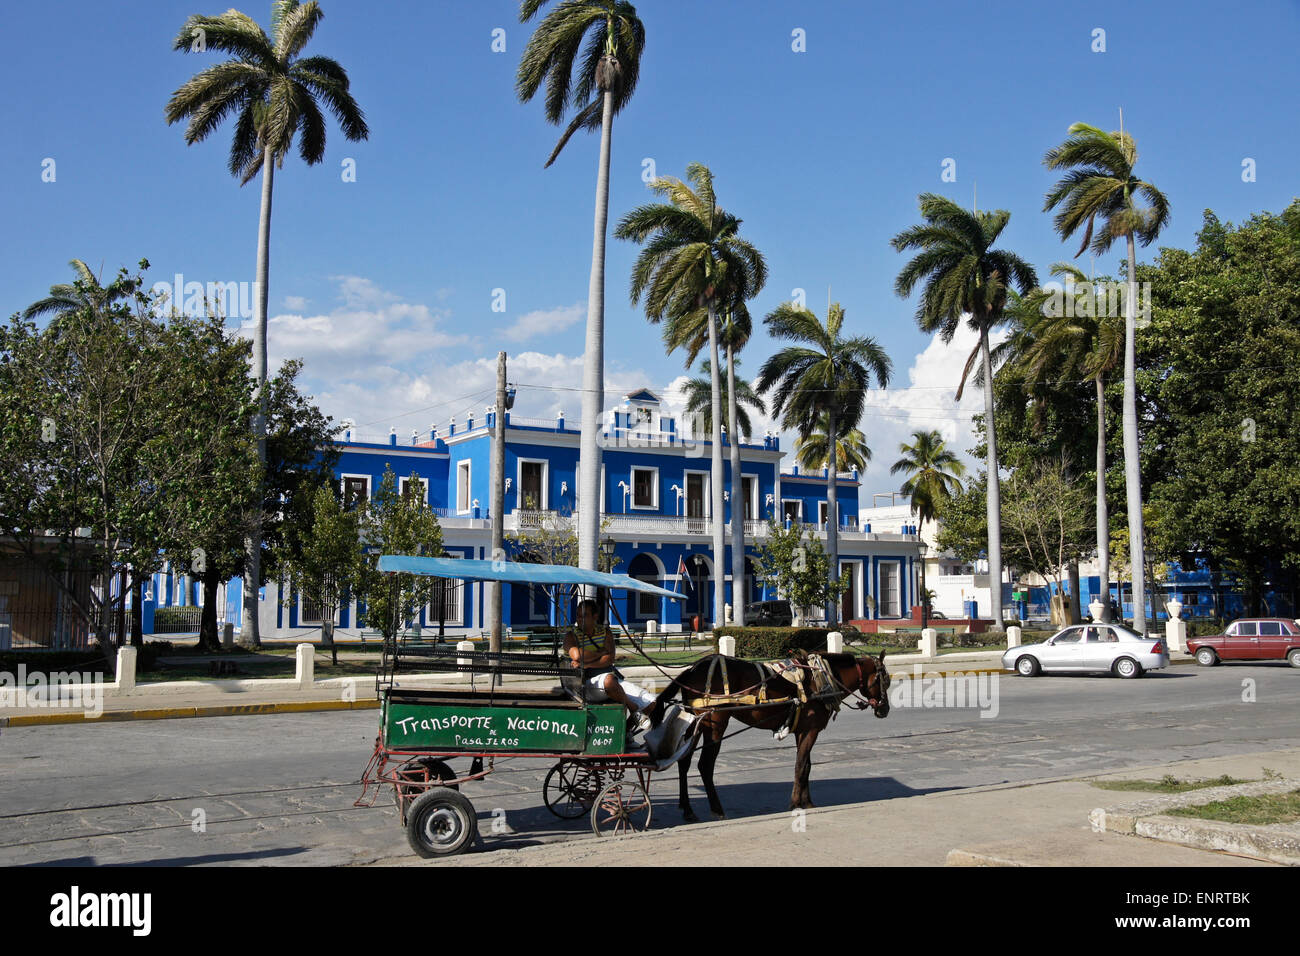 Aduana (Customs Building) and horse cart, Cienfuegos, Cuba Stock Photo